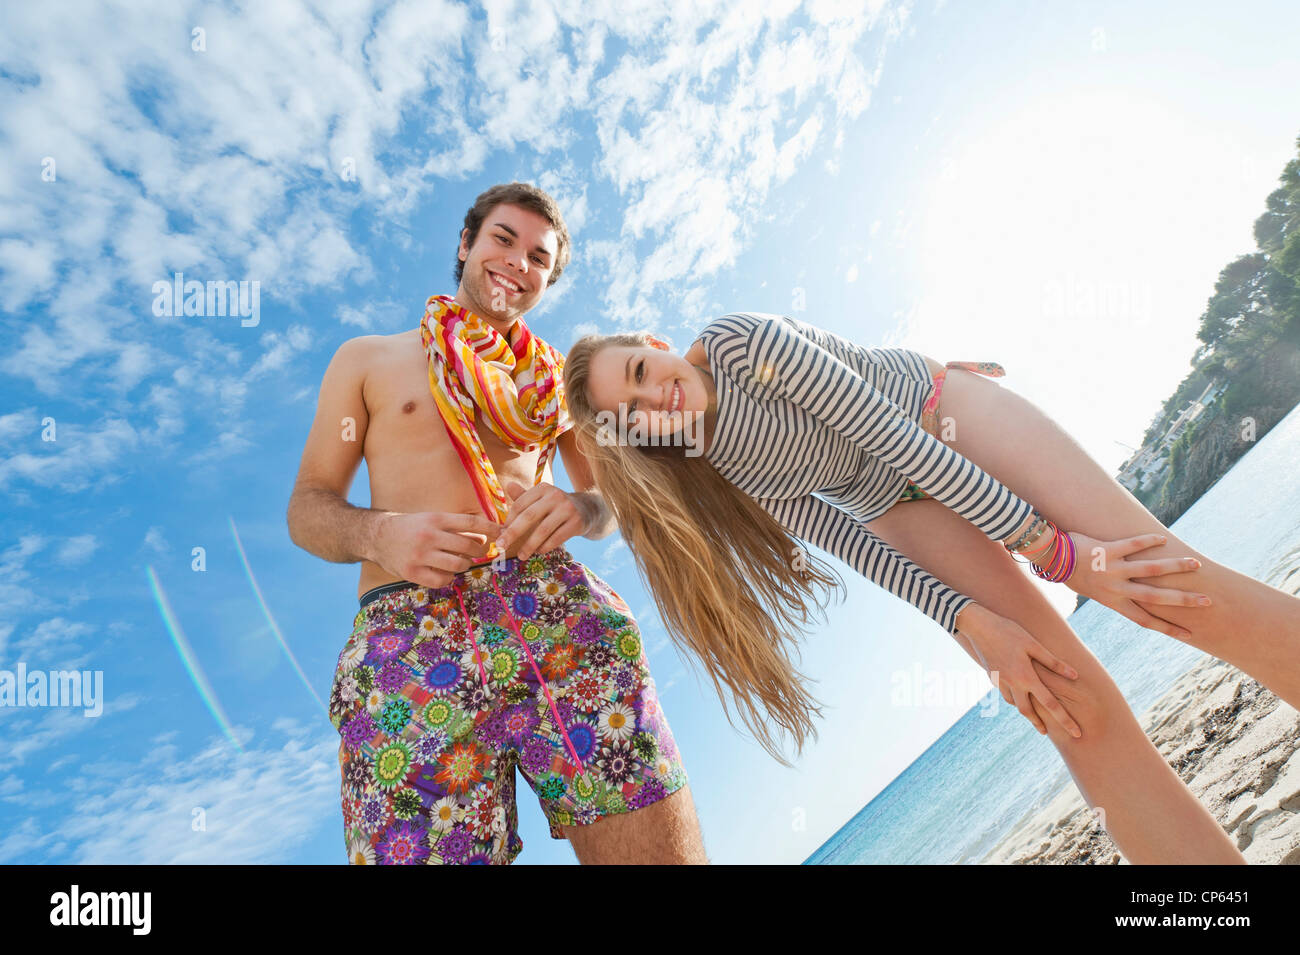 Spain, Mallorca, Couple on beach, smiling, portrait Stock Photo